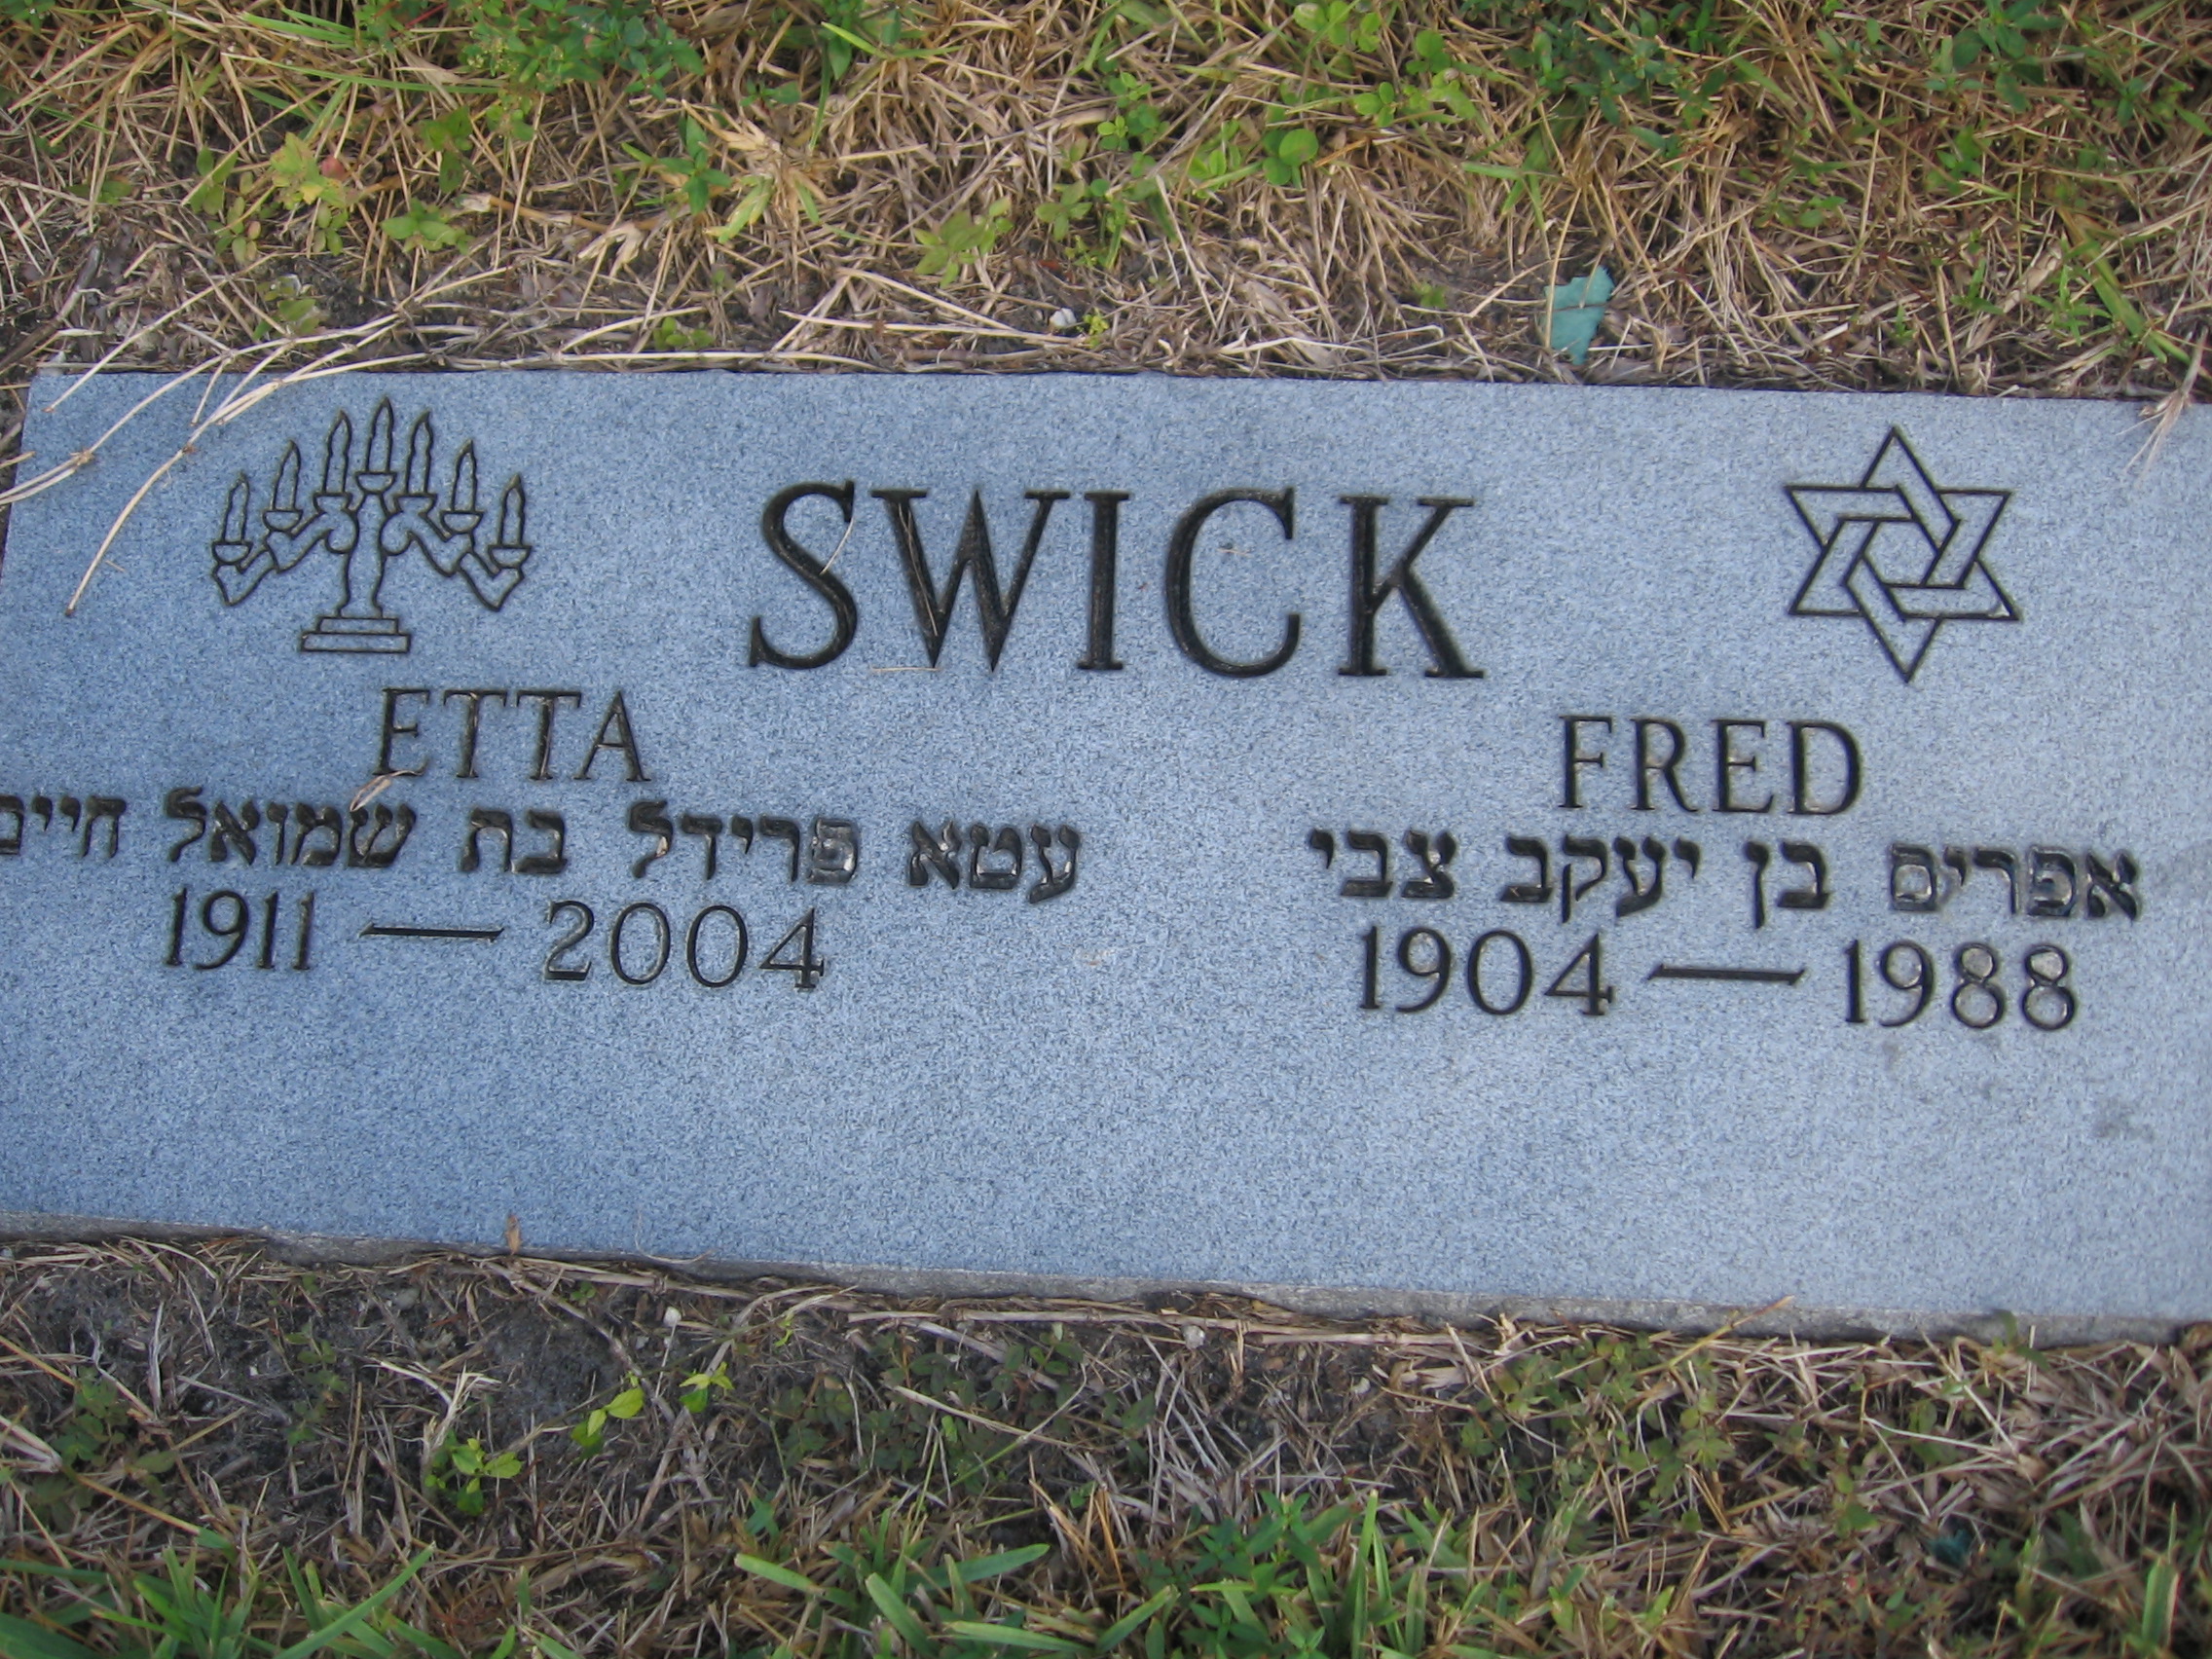 Fred Swick